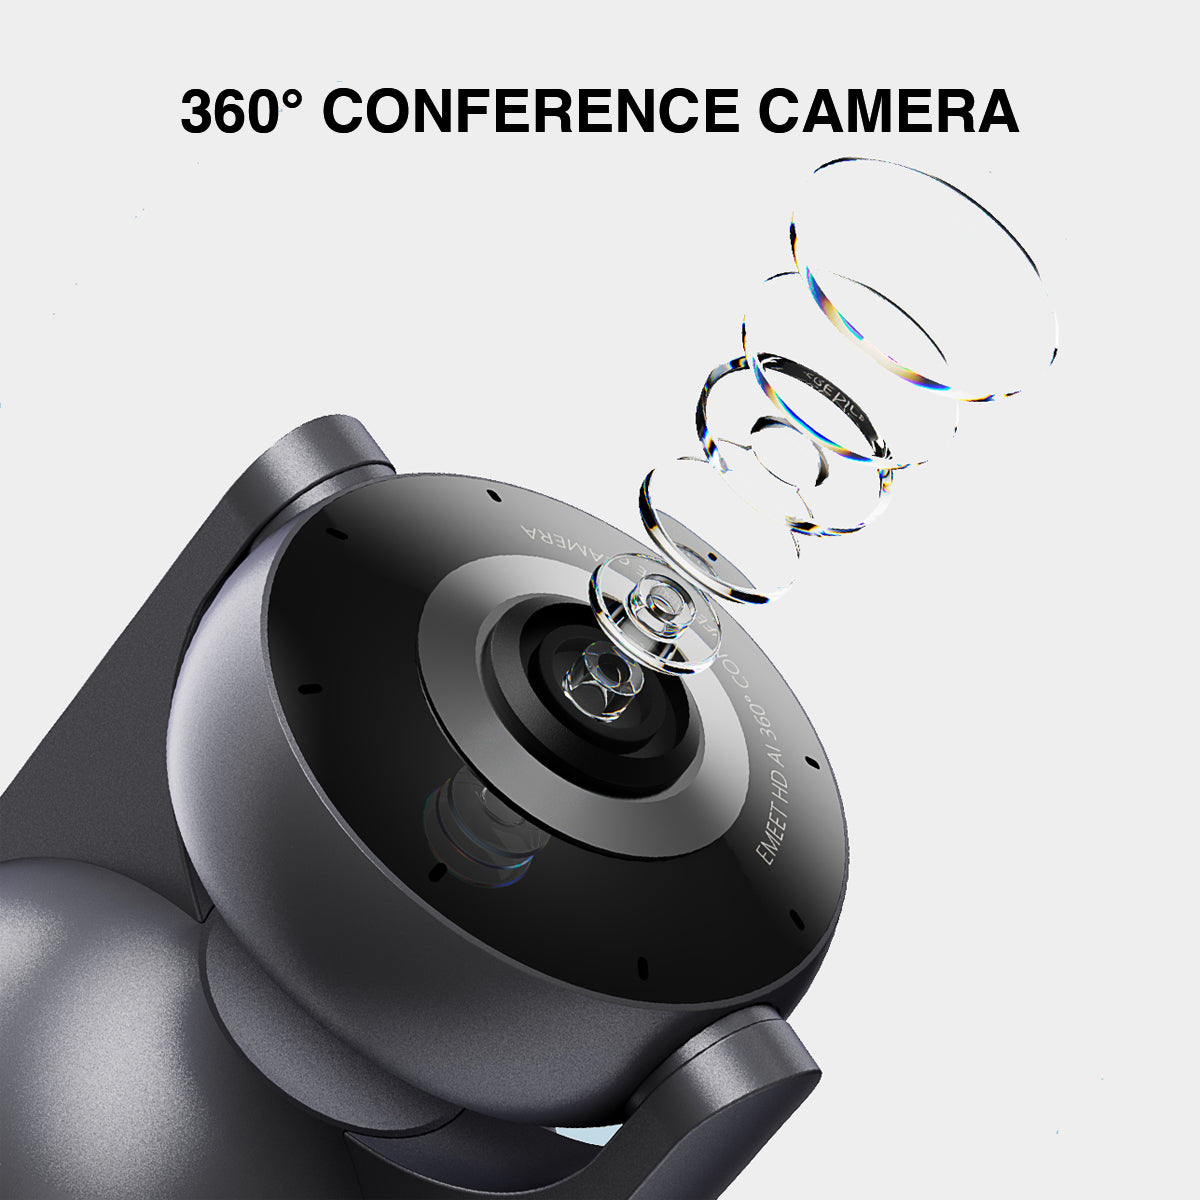 EMEET Meeting Capsule | Conference Room Camera